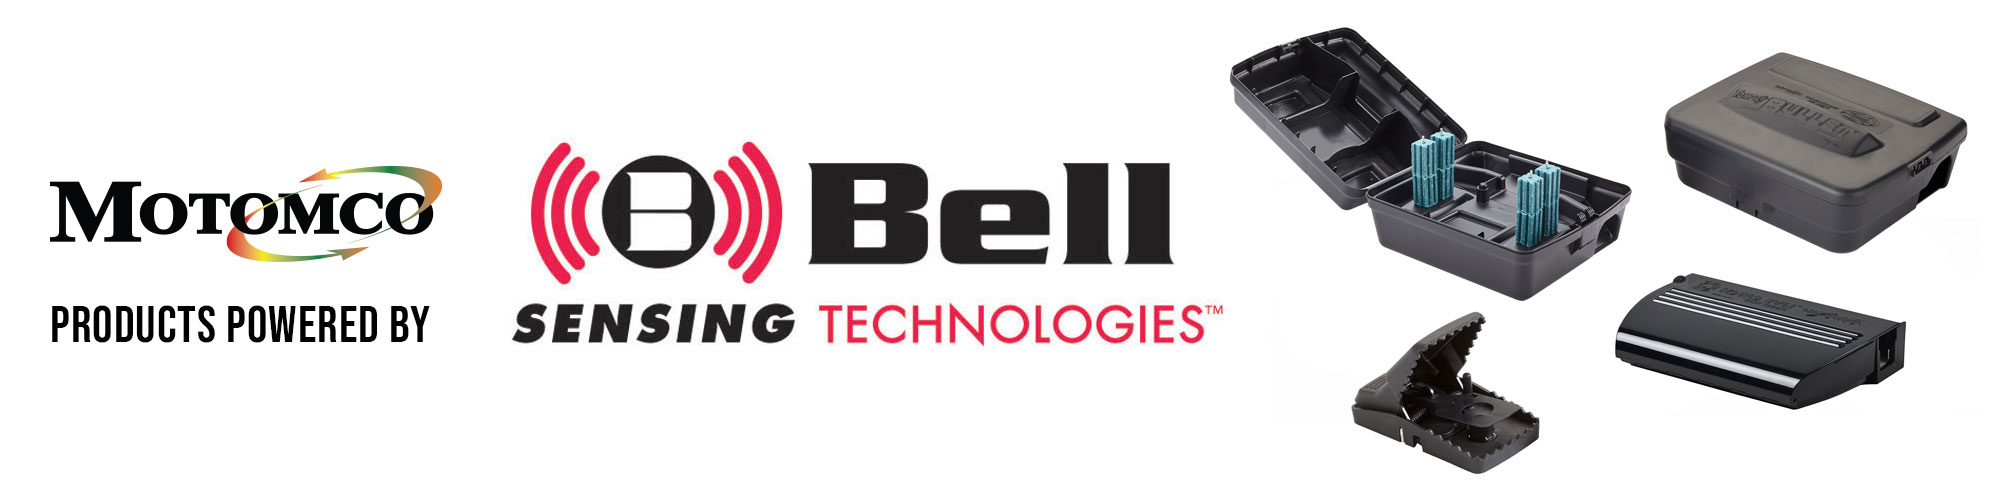 BellSensing logo AG Motomco products